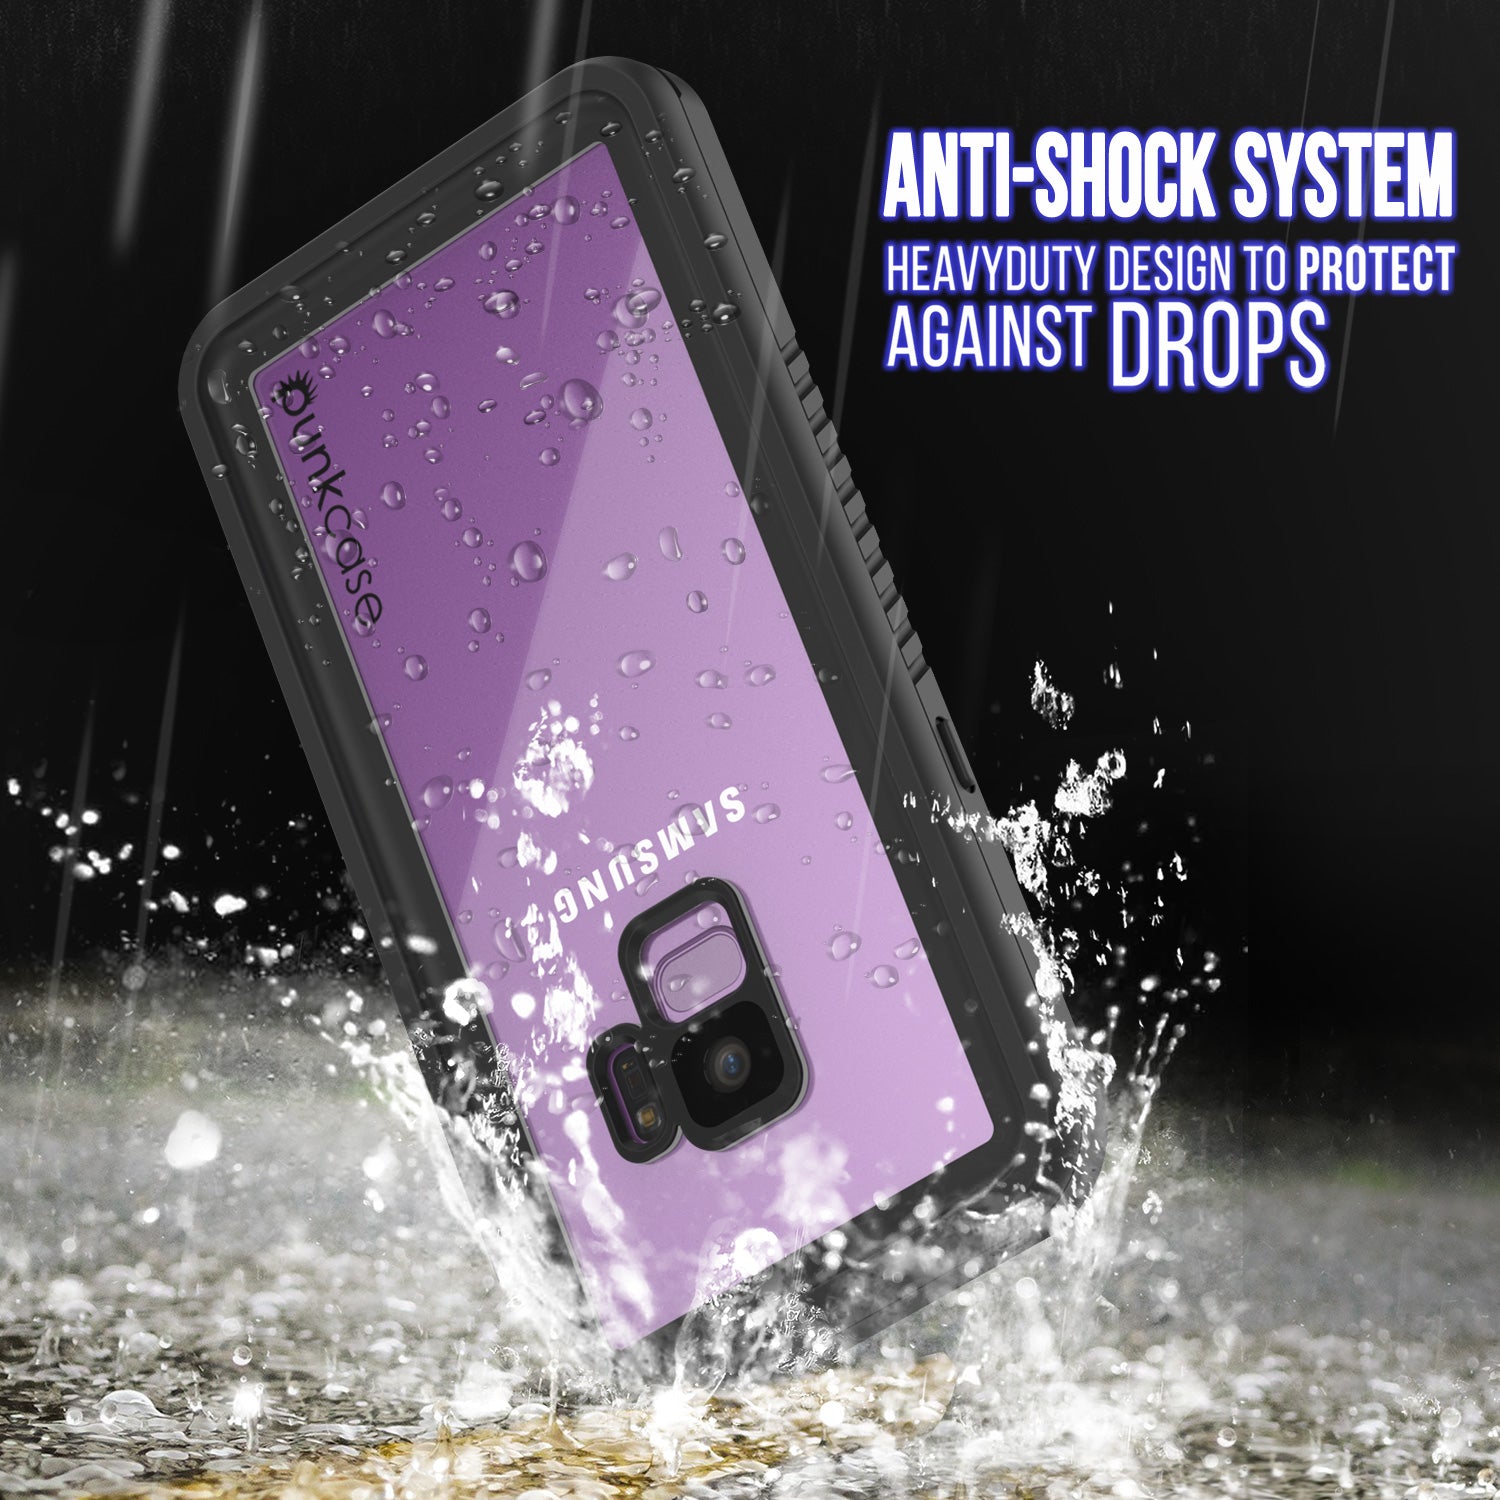 Galaxy S9 Plus Water/Shock/Snow/dirt proof Punkcase Slim Case [White]